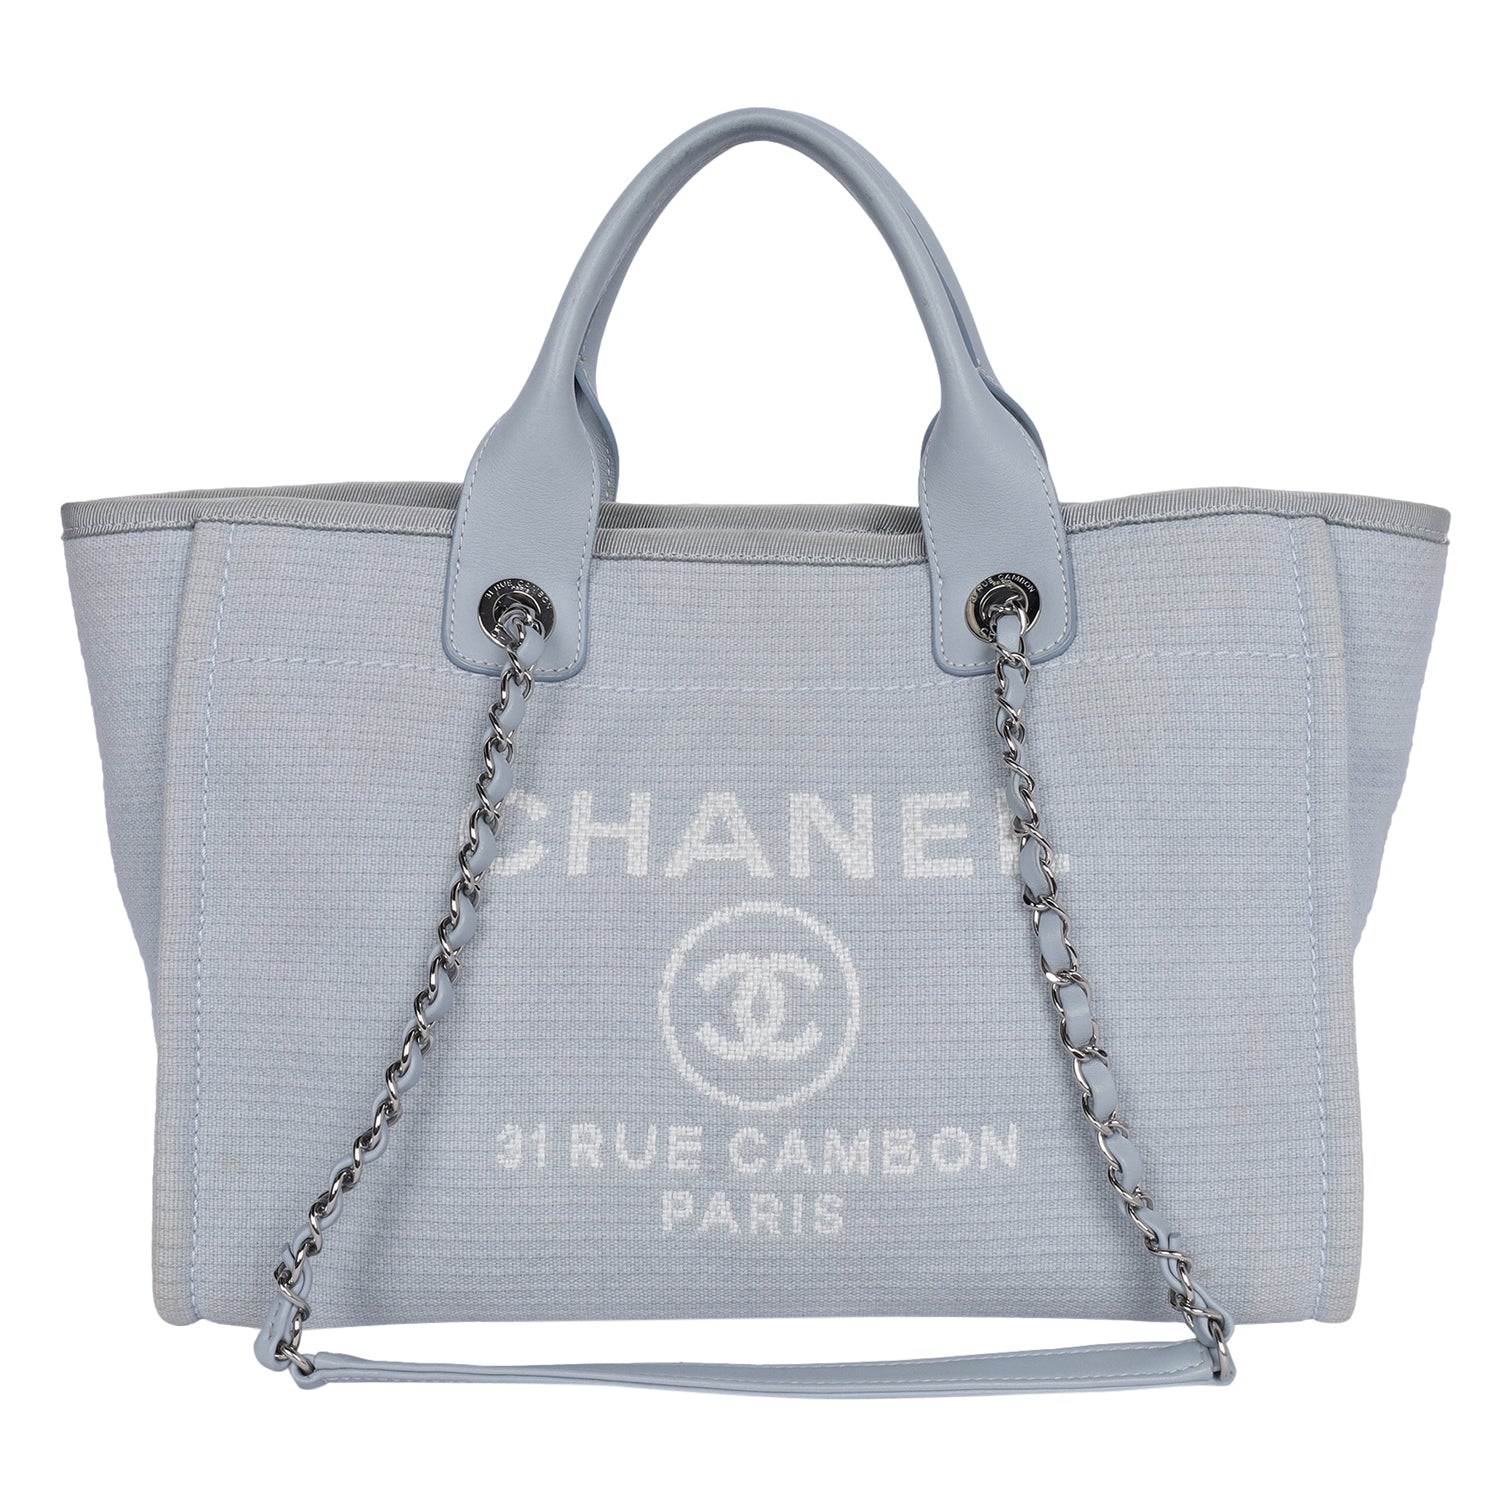 Chanel - Authenticated Deauville Handbag - Cloth Blue Plain for Women, Never Worn